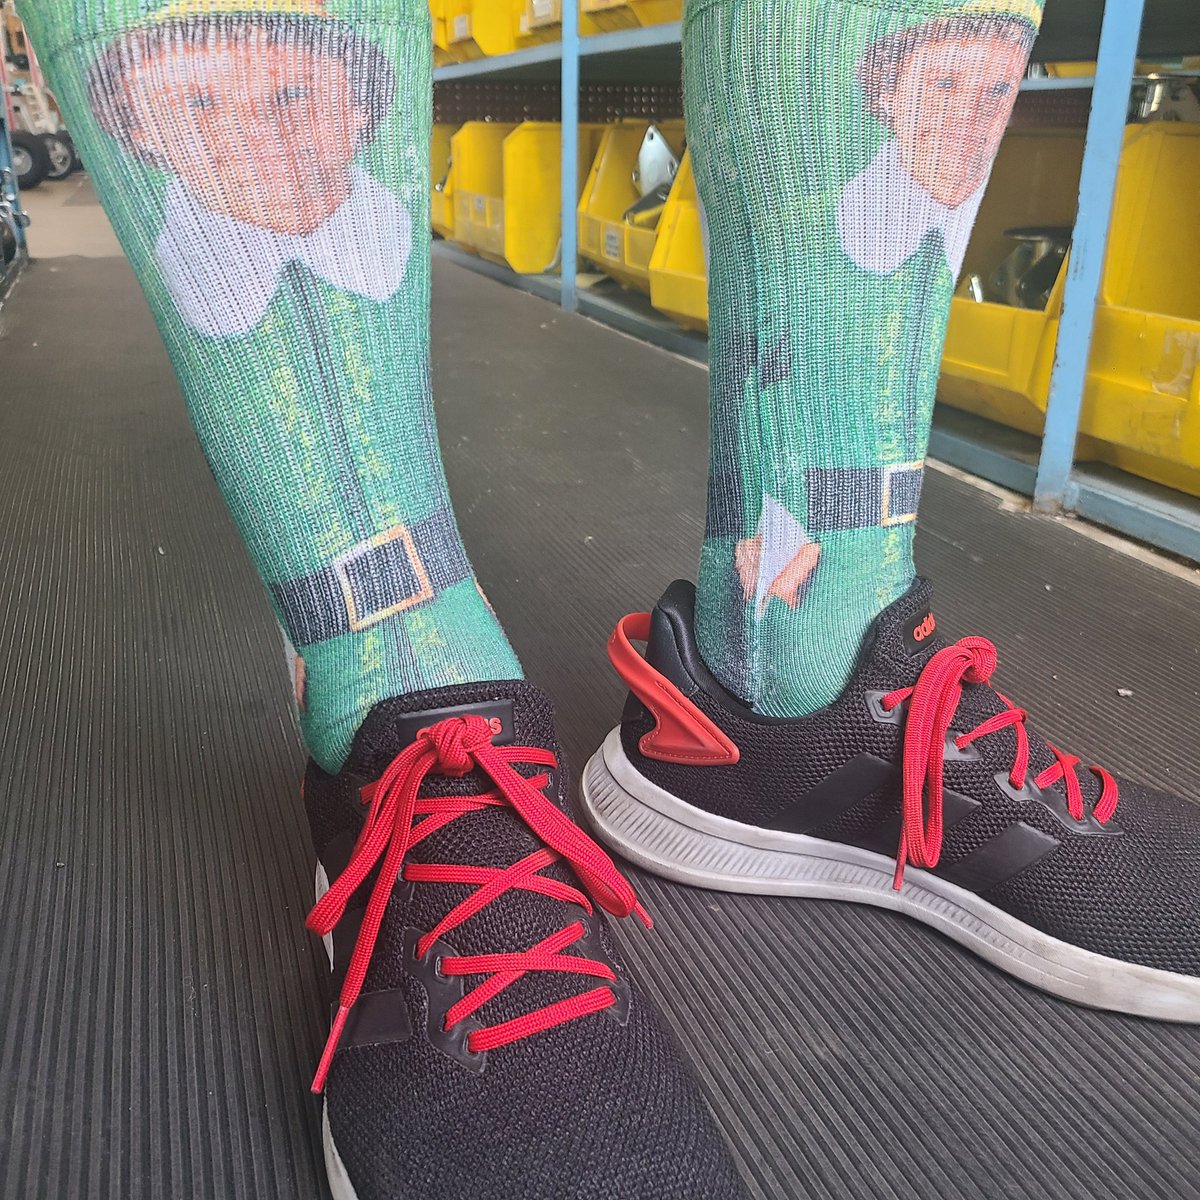 Elf socks & Adidas Lite Racer BYD 2.0 #elfsocks #elf #sonofanutcracker #popculture #socksofinstagram #ootd #shoesofinstagram #adidas @Adidas  #literacer #yesadidas #threestripes #threestripelife